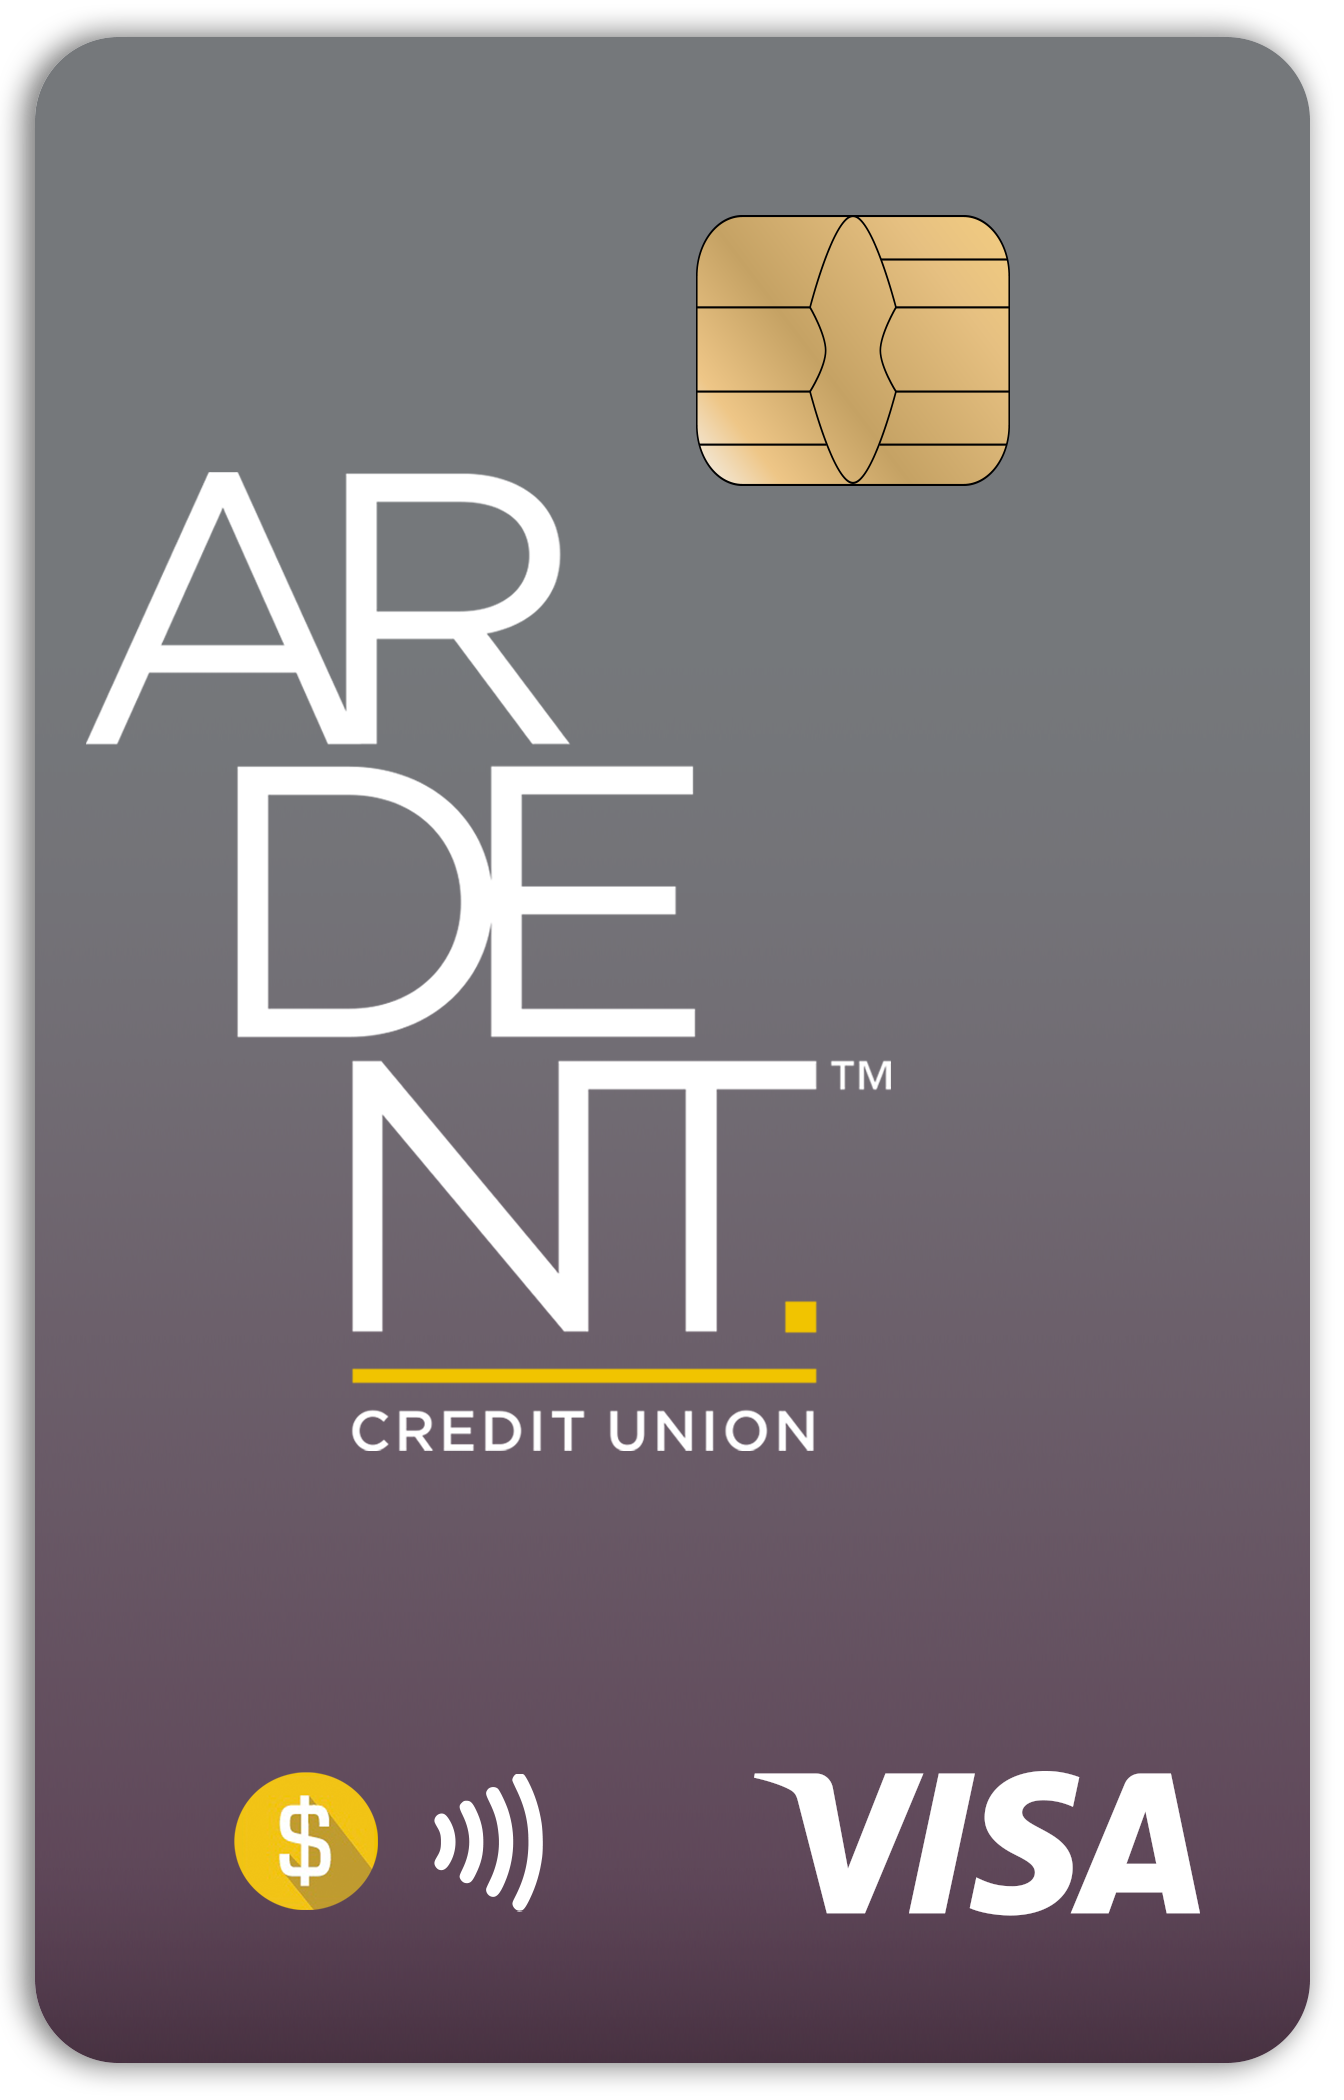 Ardent Credit Union